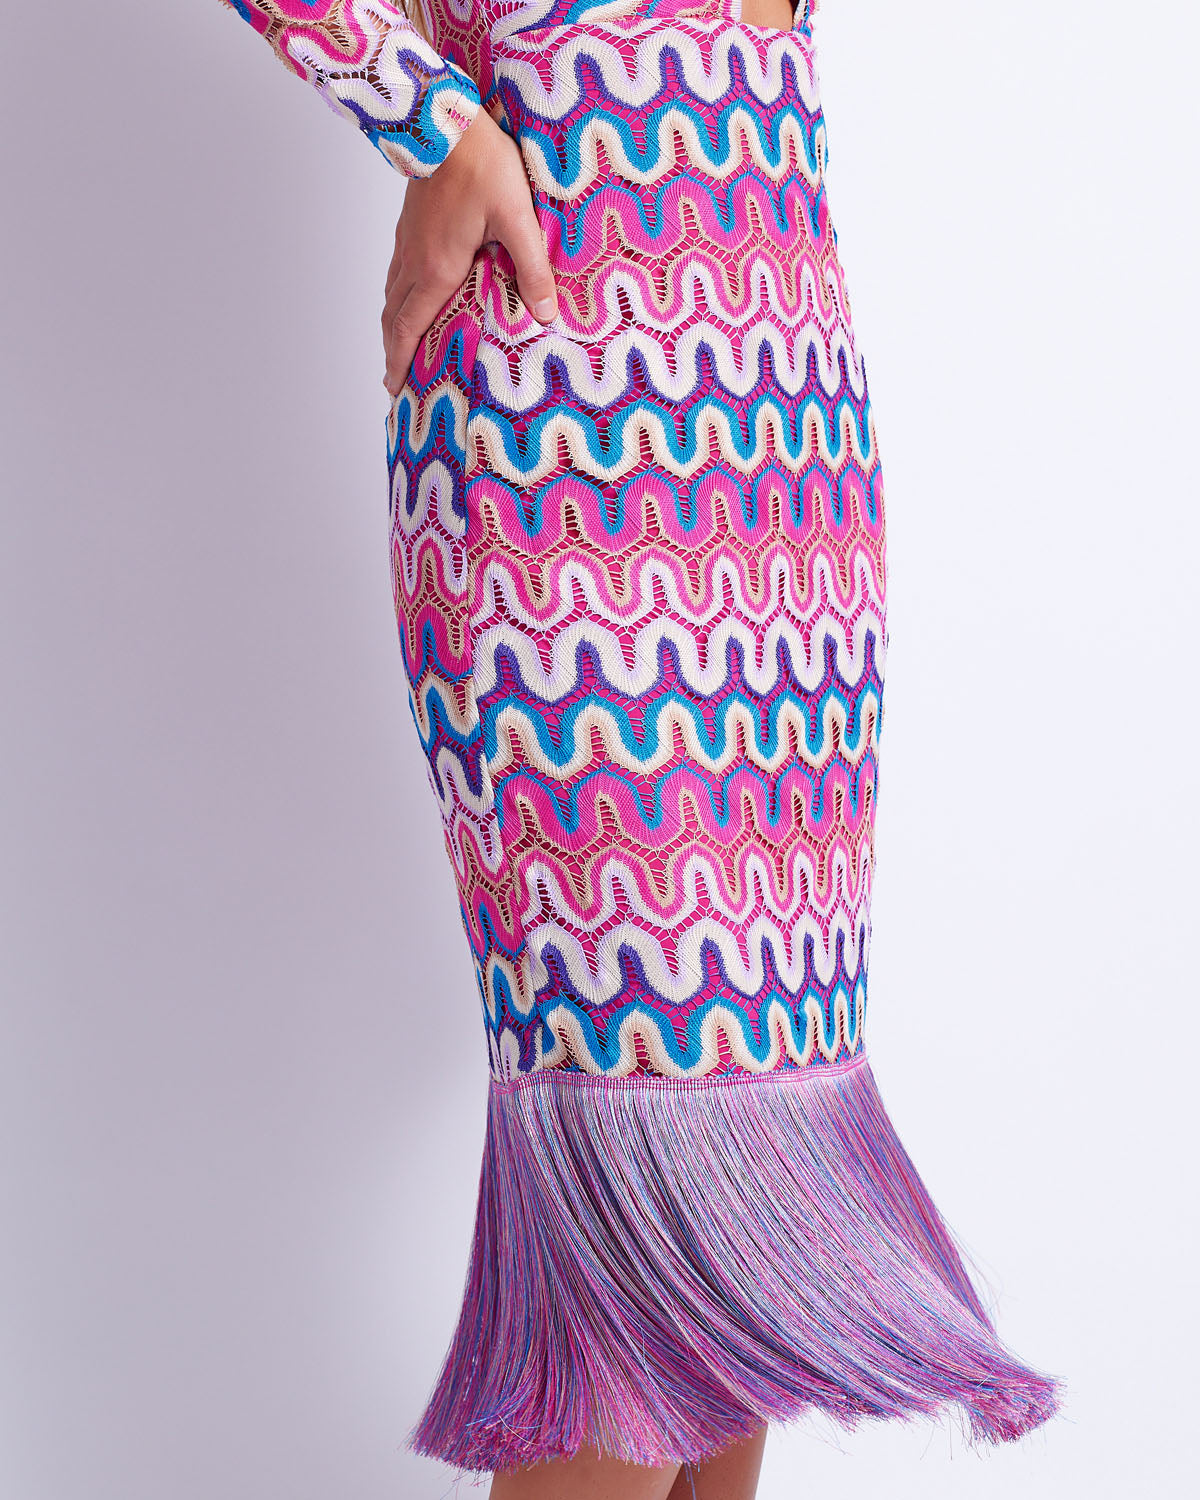 PatBo Crochet Cut Out Fringe Dress - Premium Long Dresses from Marina St Barth - Just $825! Shop now at Marina St Barth